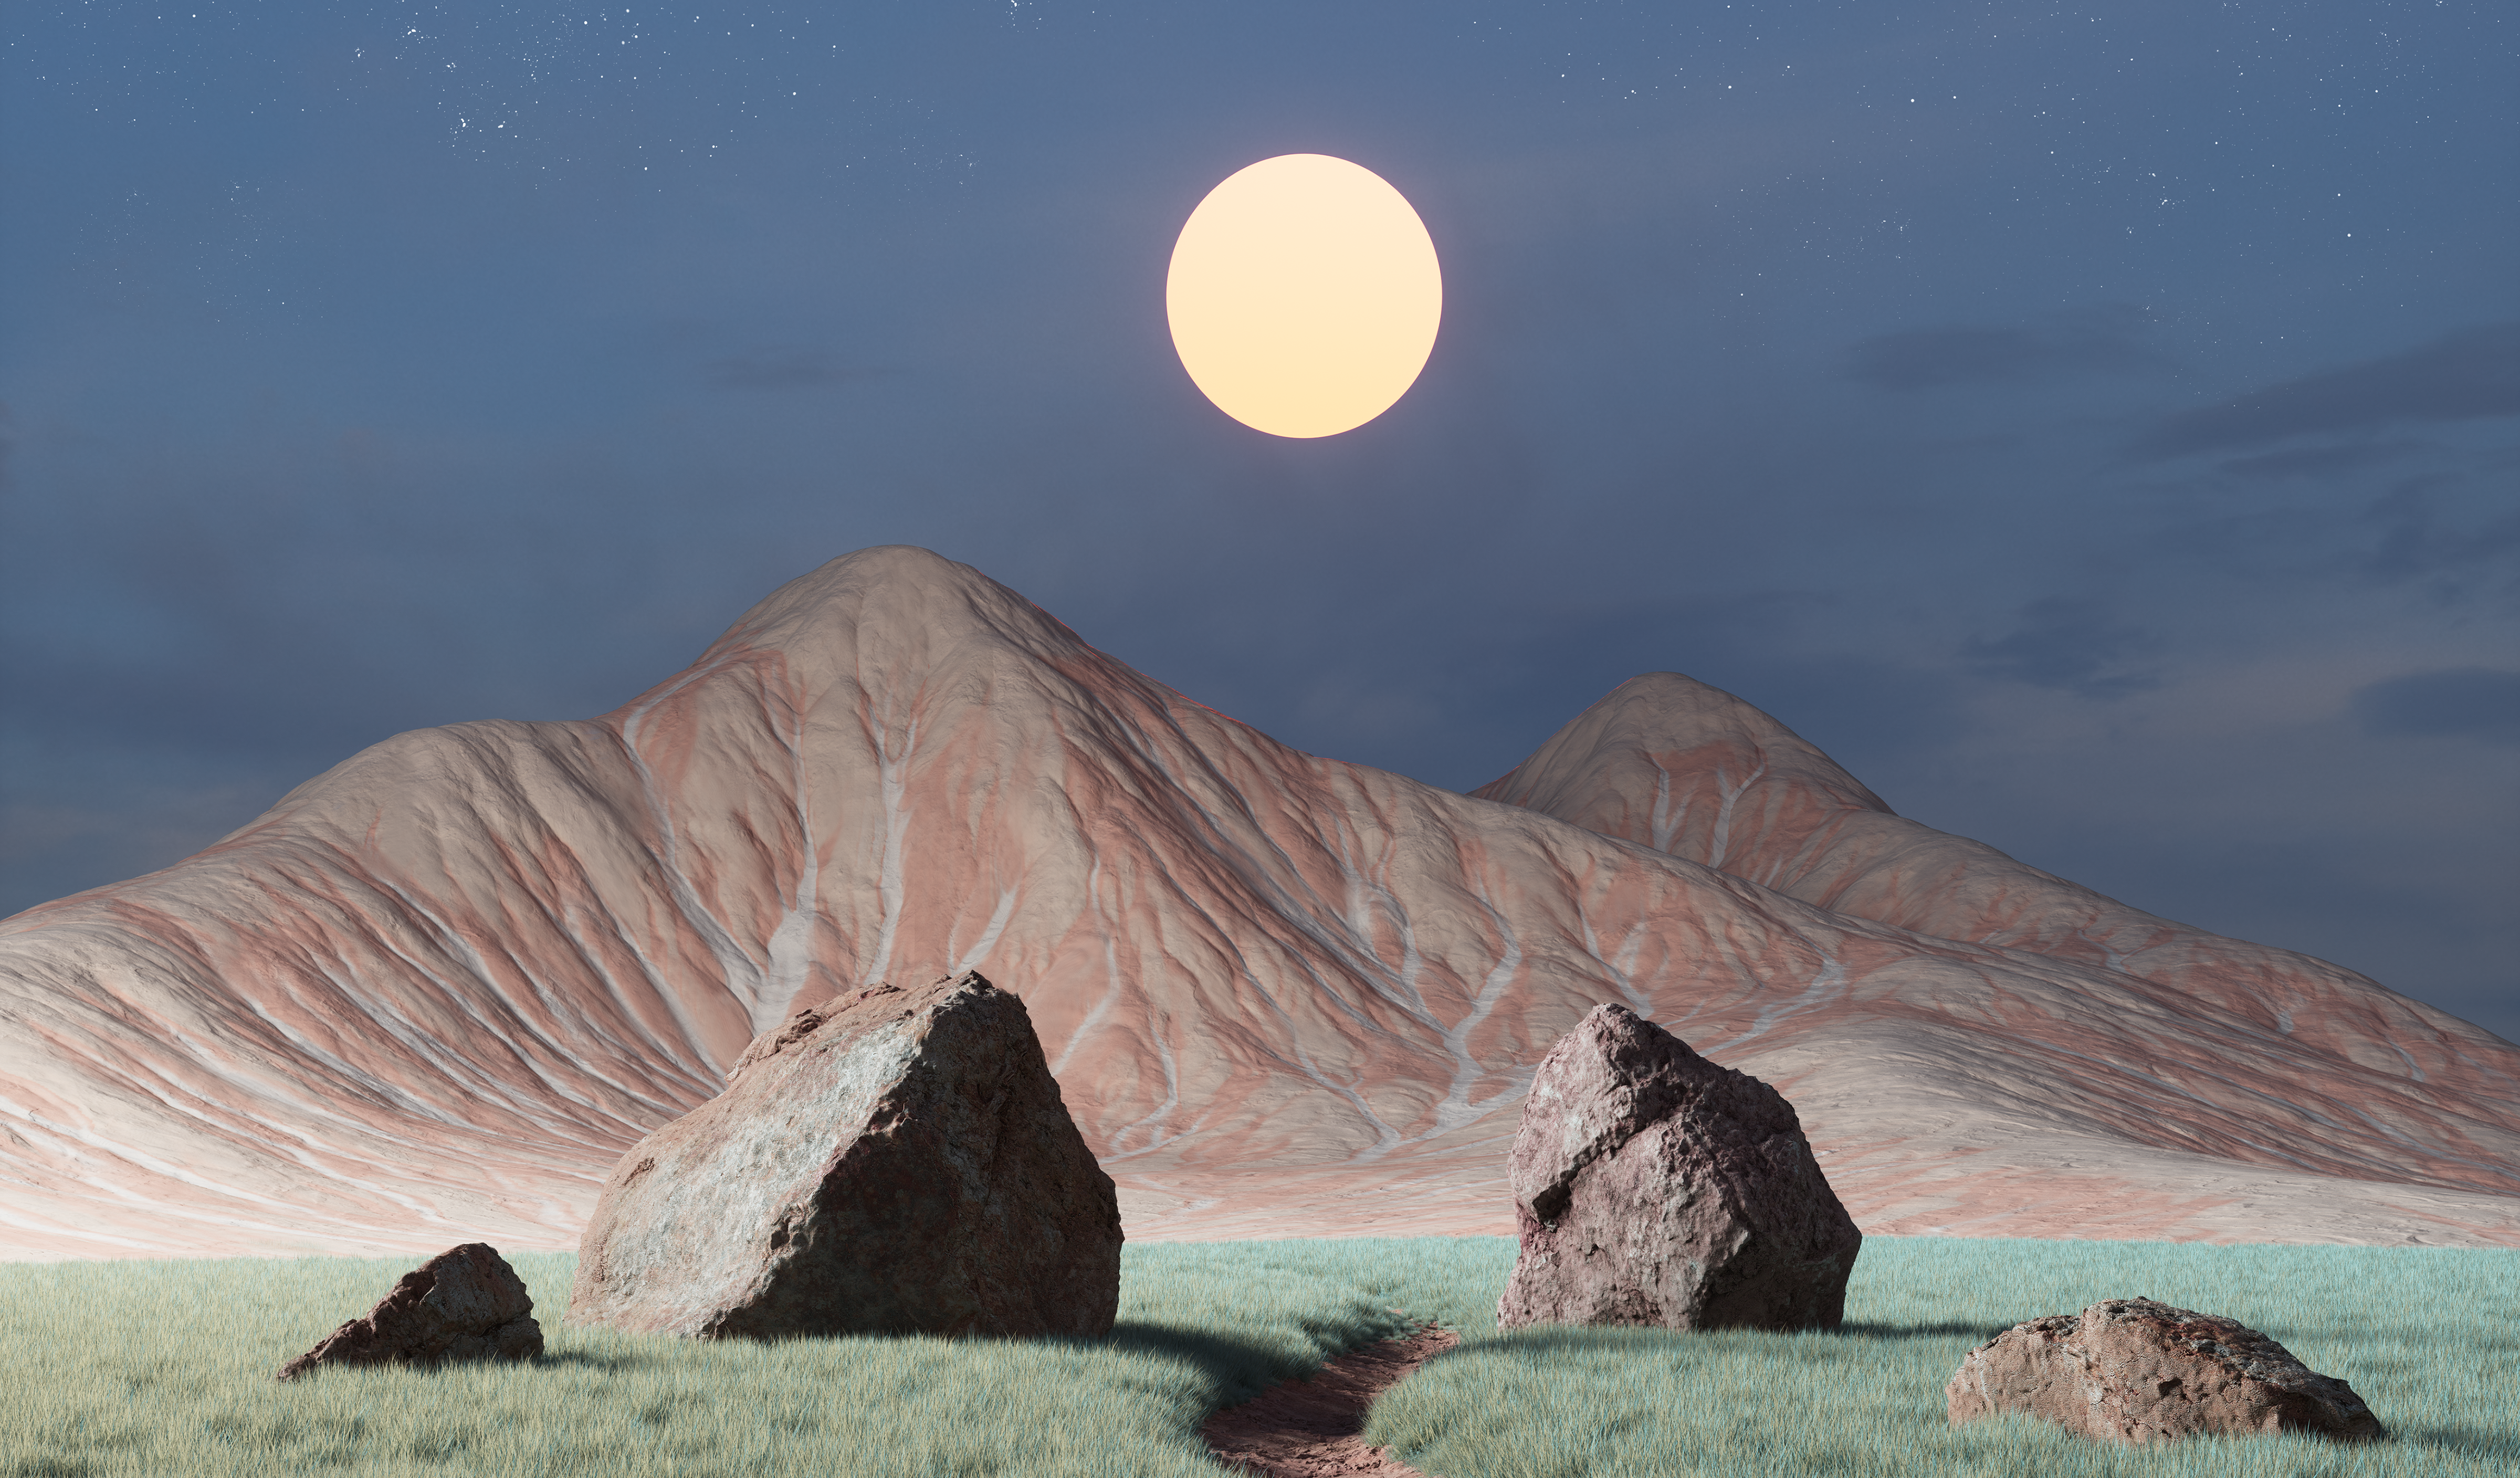 General 4800x2815 digital art artwork illustration nature mountains Sun sky landscape night nightscape rocks